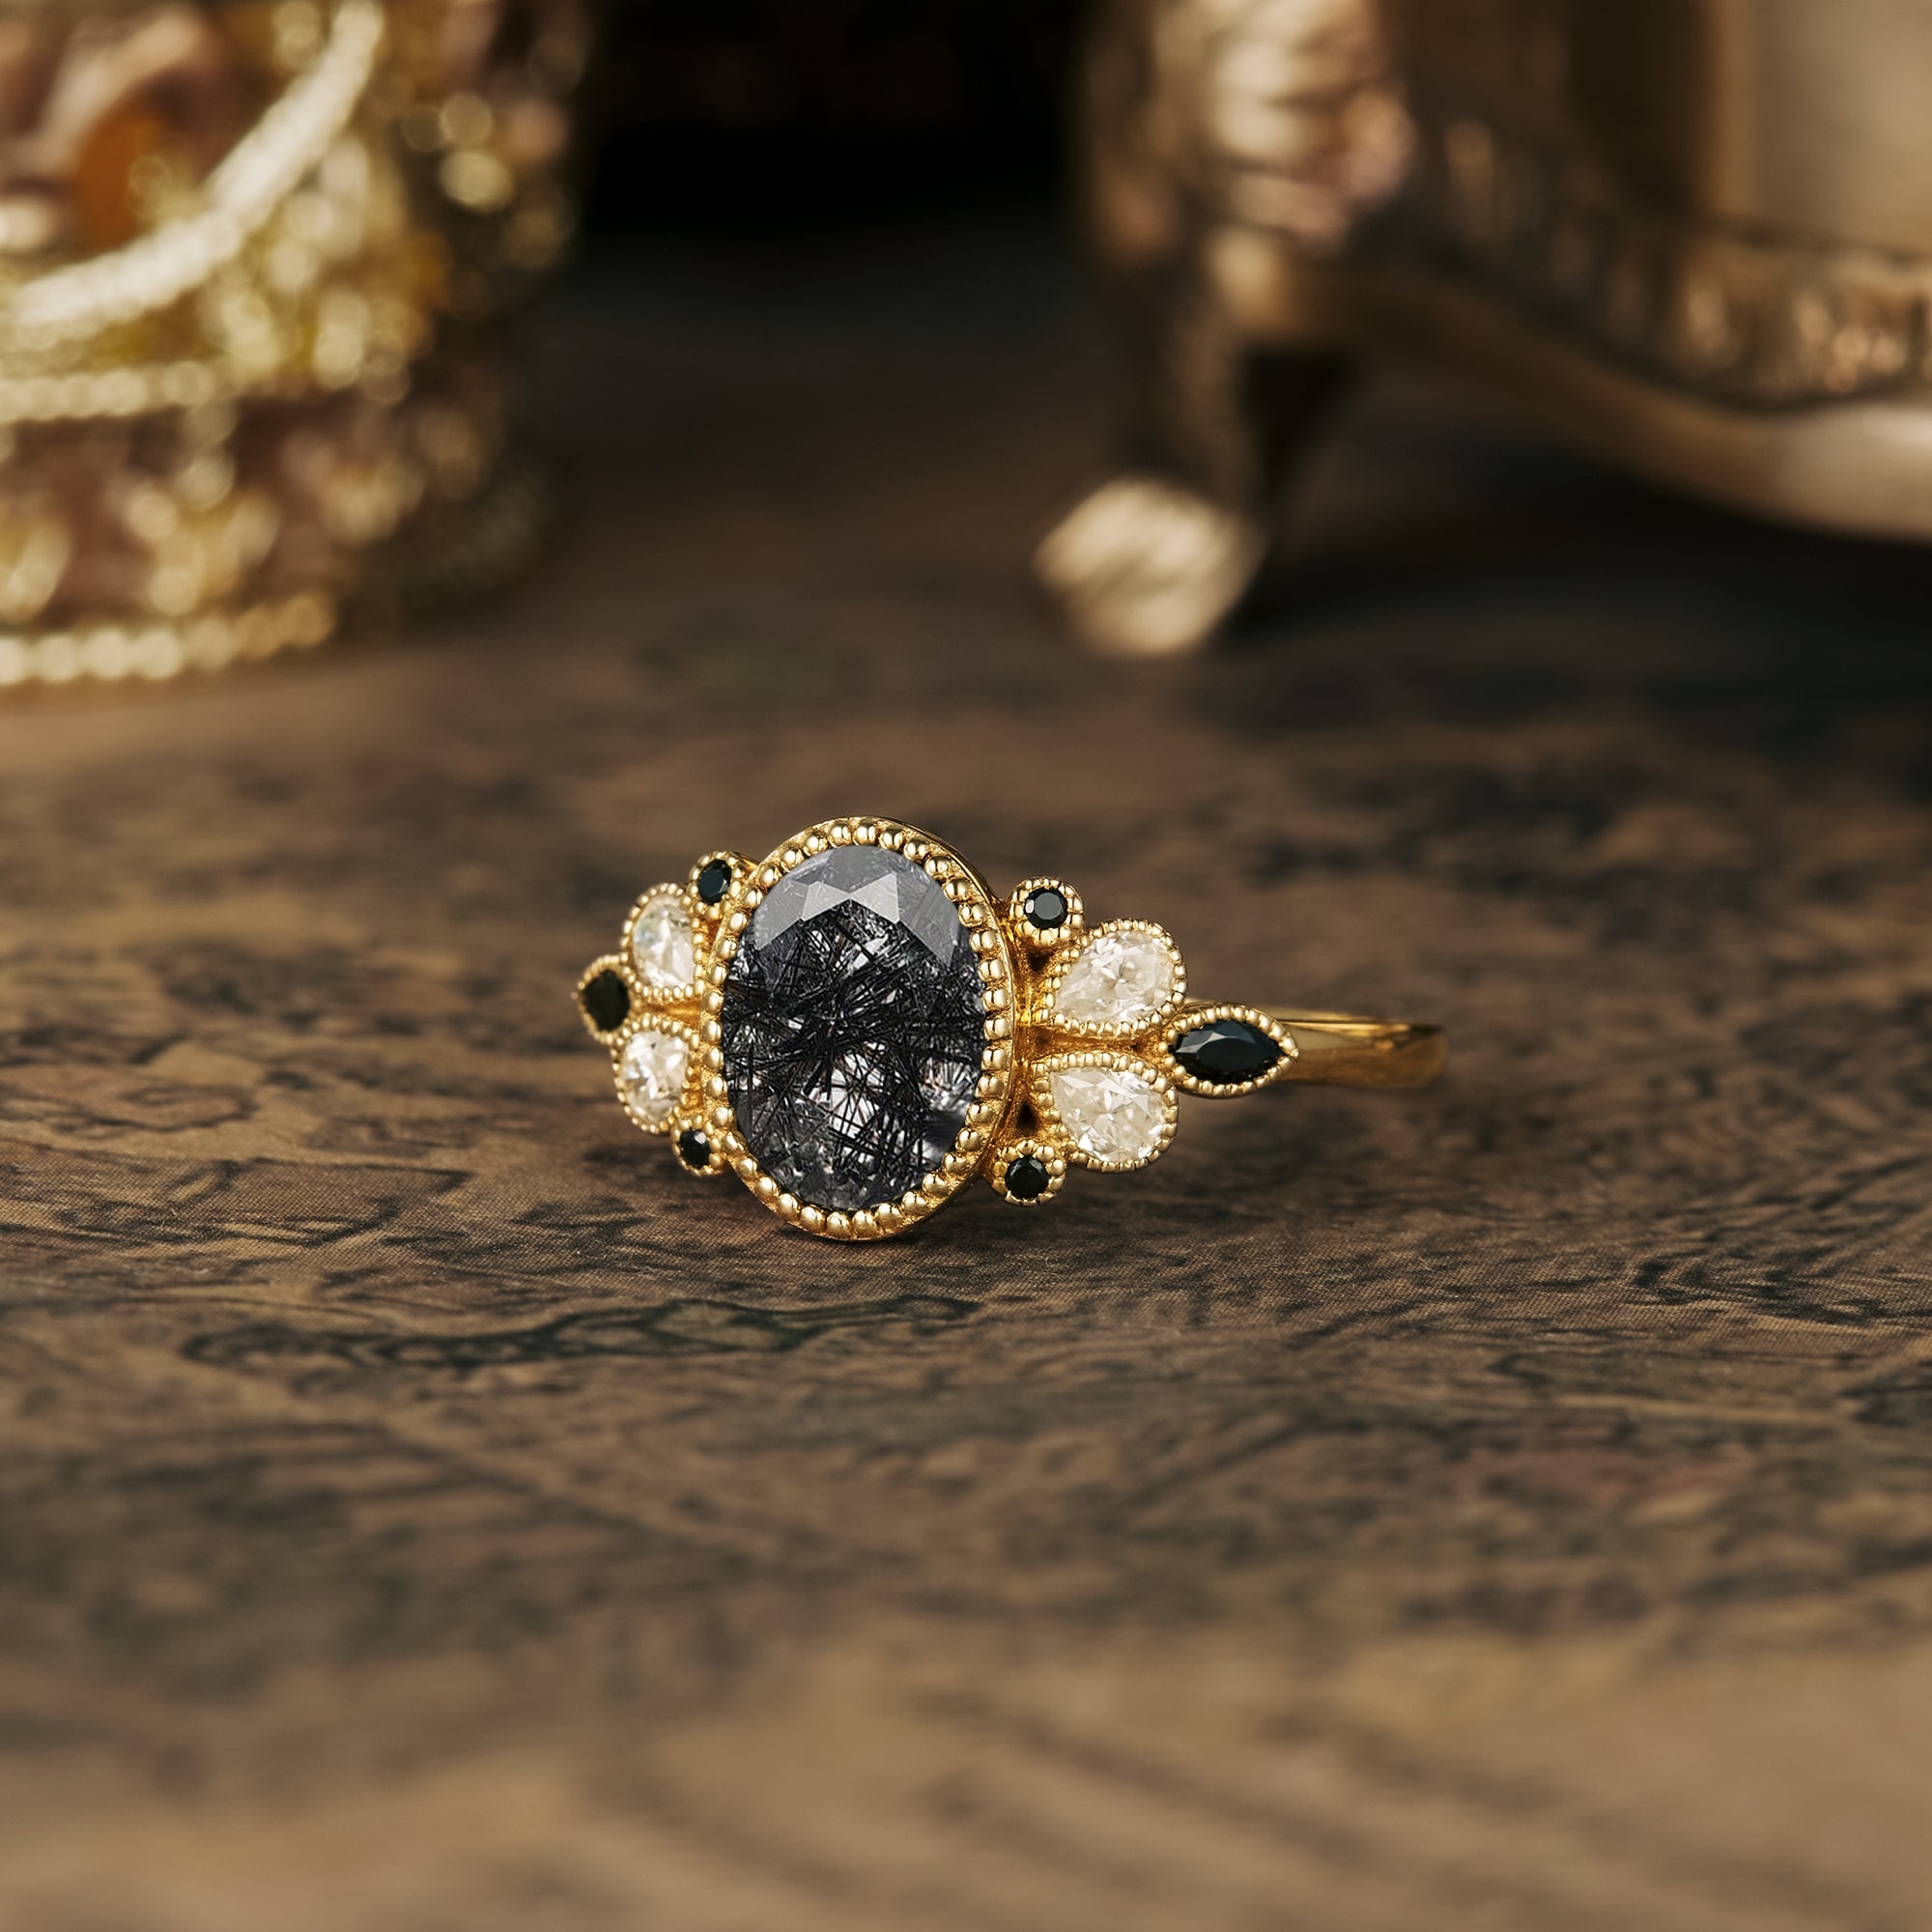 Vintage Black Rutilated Quartz Engagement Rings For Women | AurumLuminos CUSTOM RING